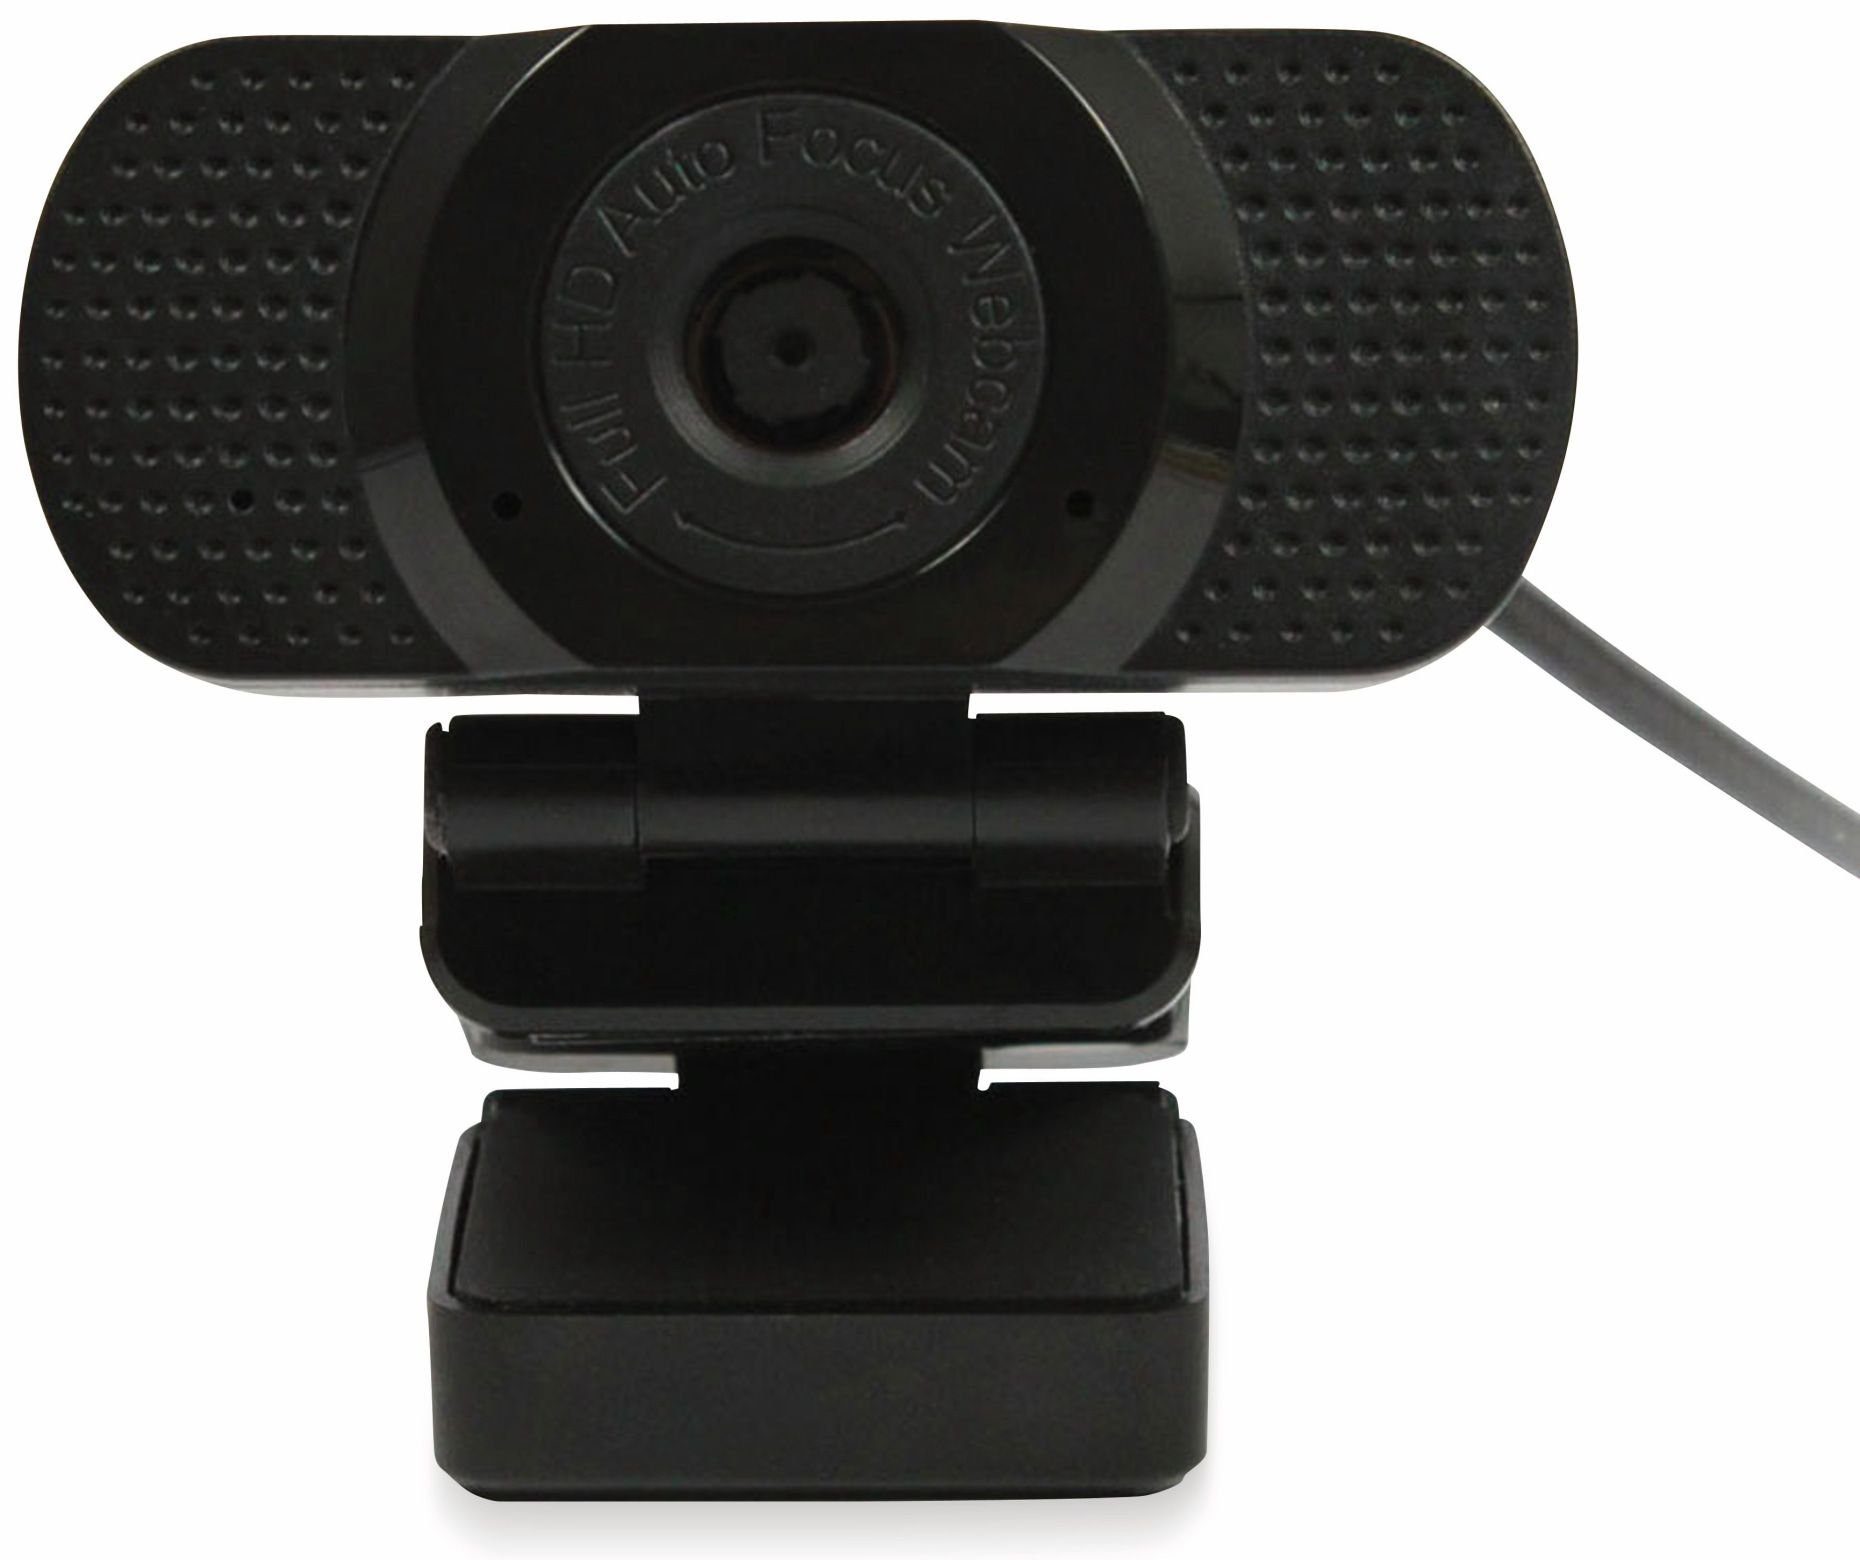 PLUSONIC HD Full Webcam plusonic USB, PSUS20AT, Webcam